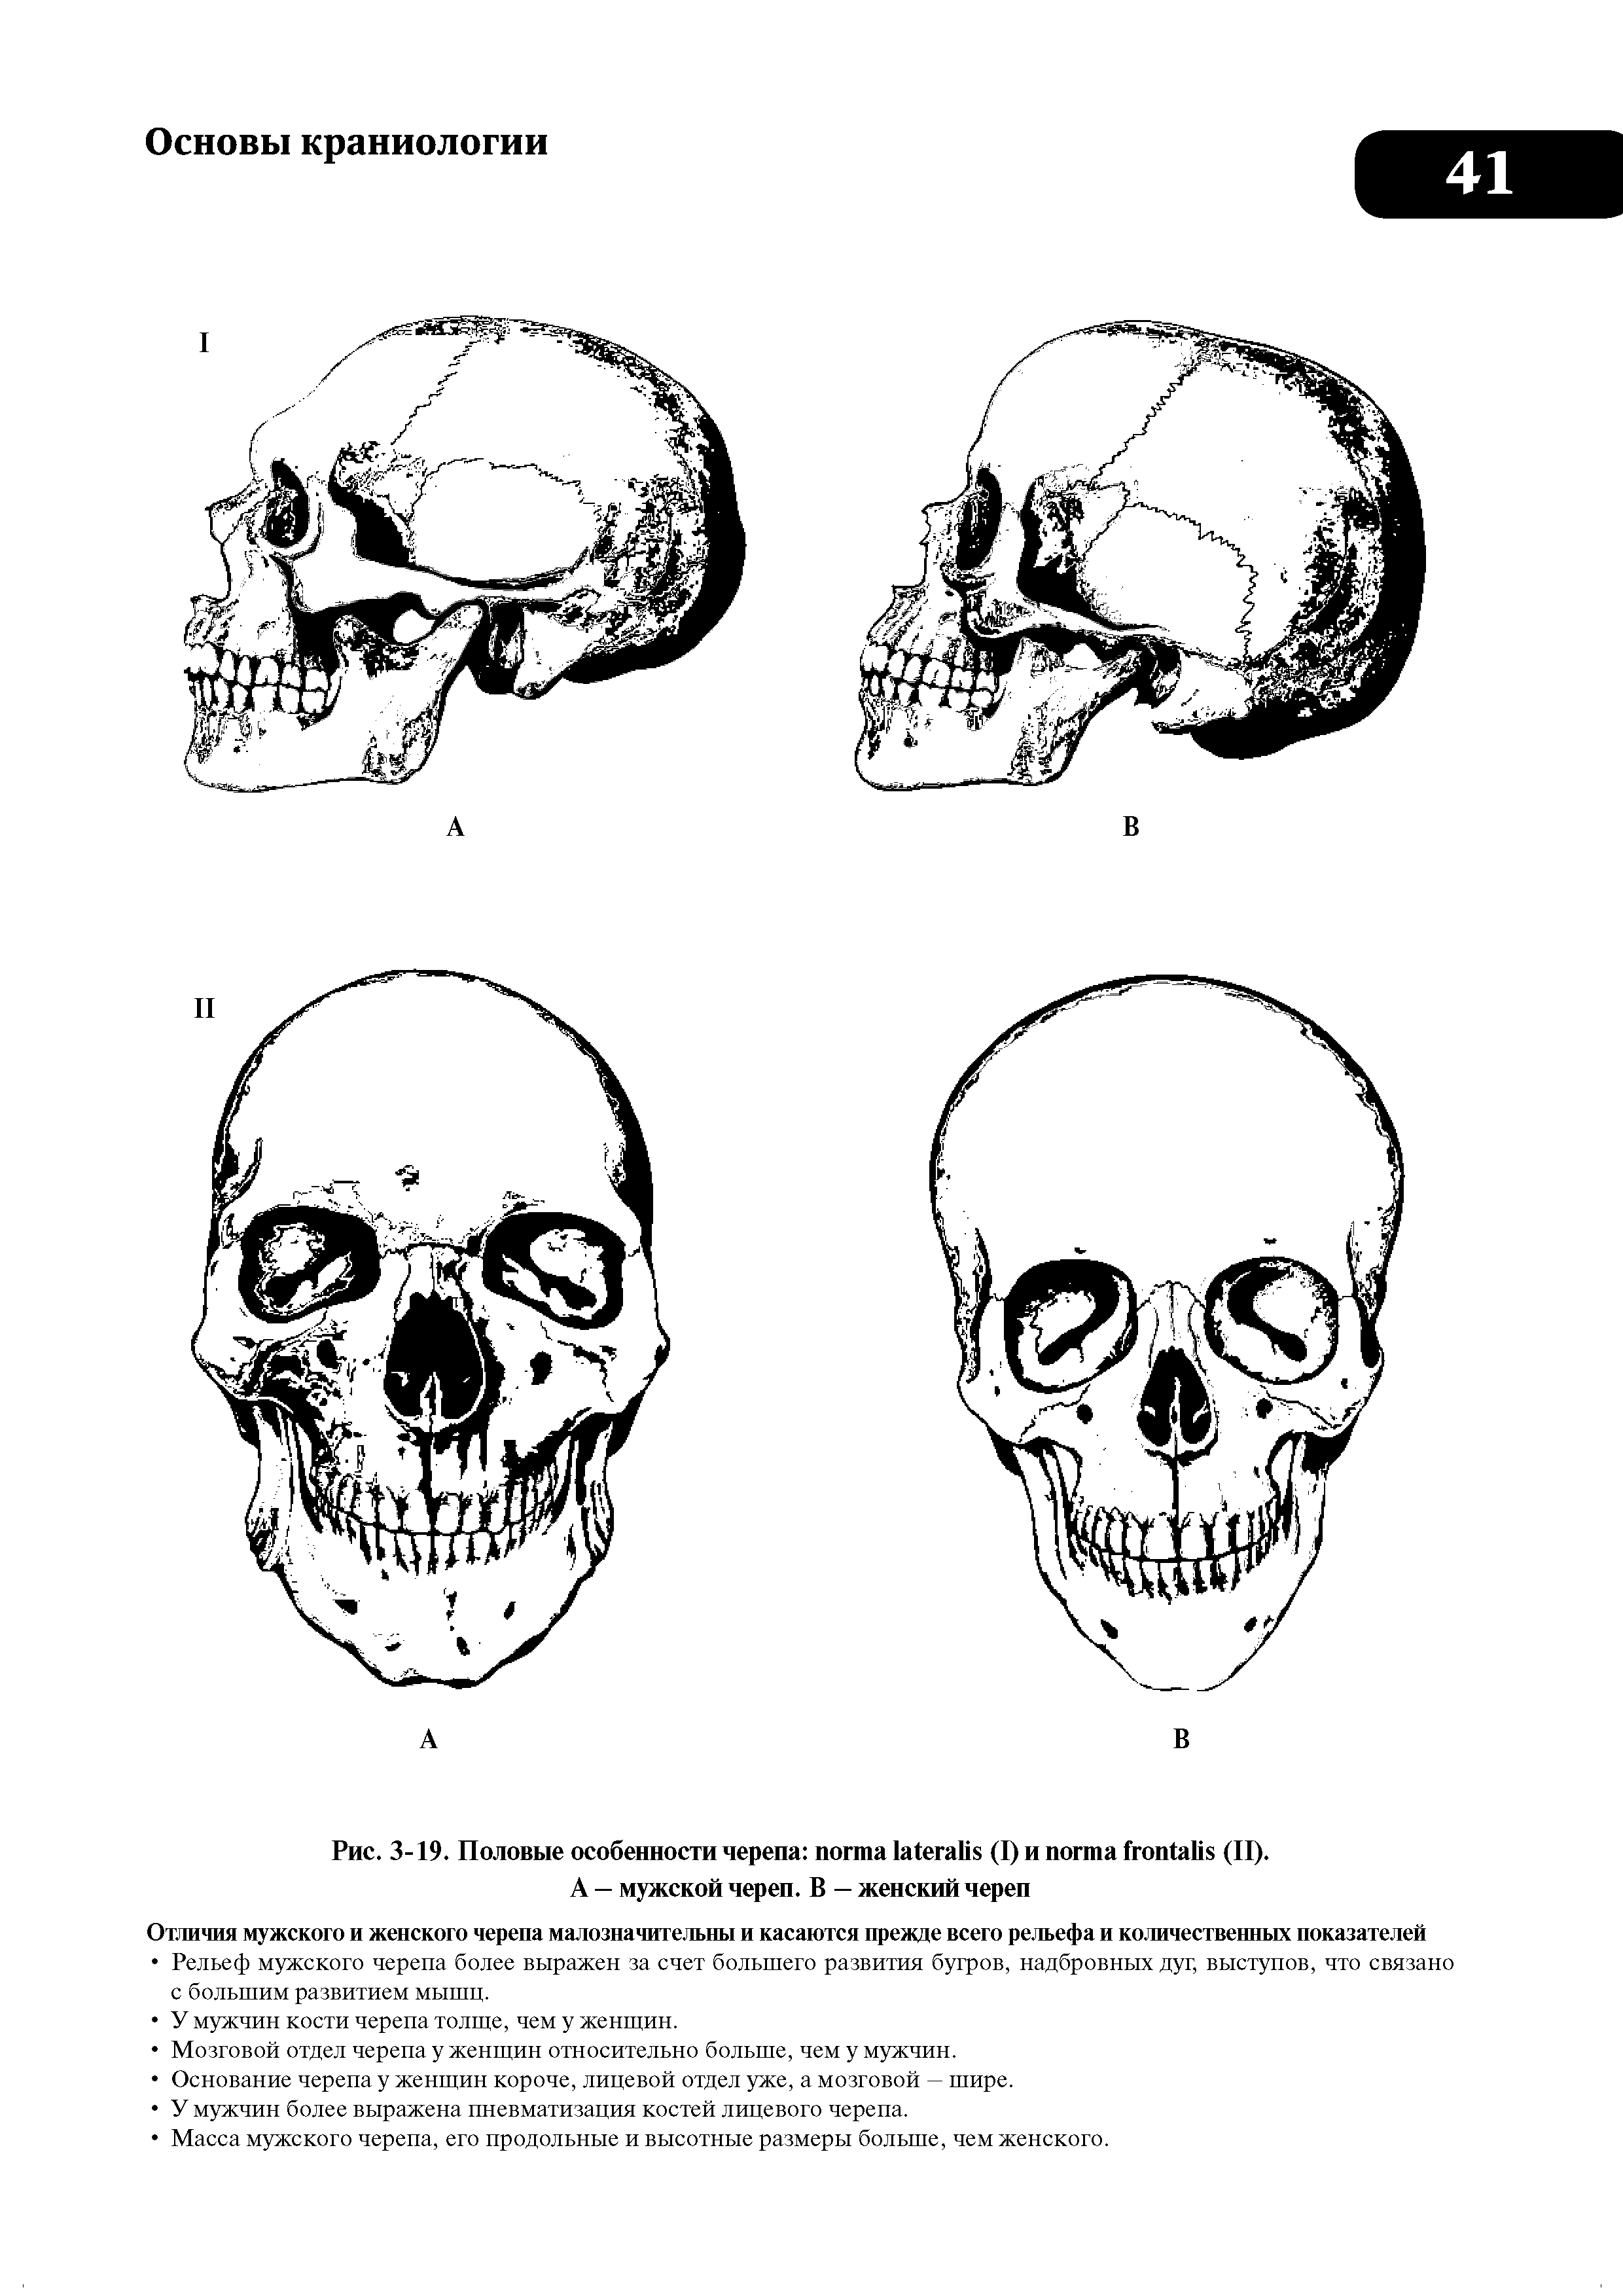 Рис. 3-19. Половые особенности черепа (I) и (II).